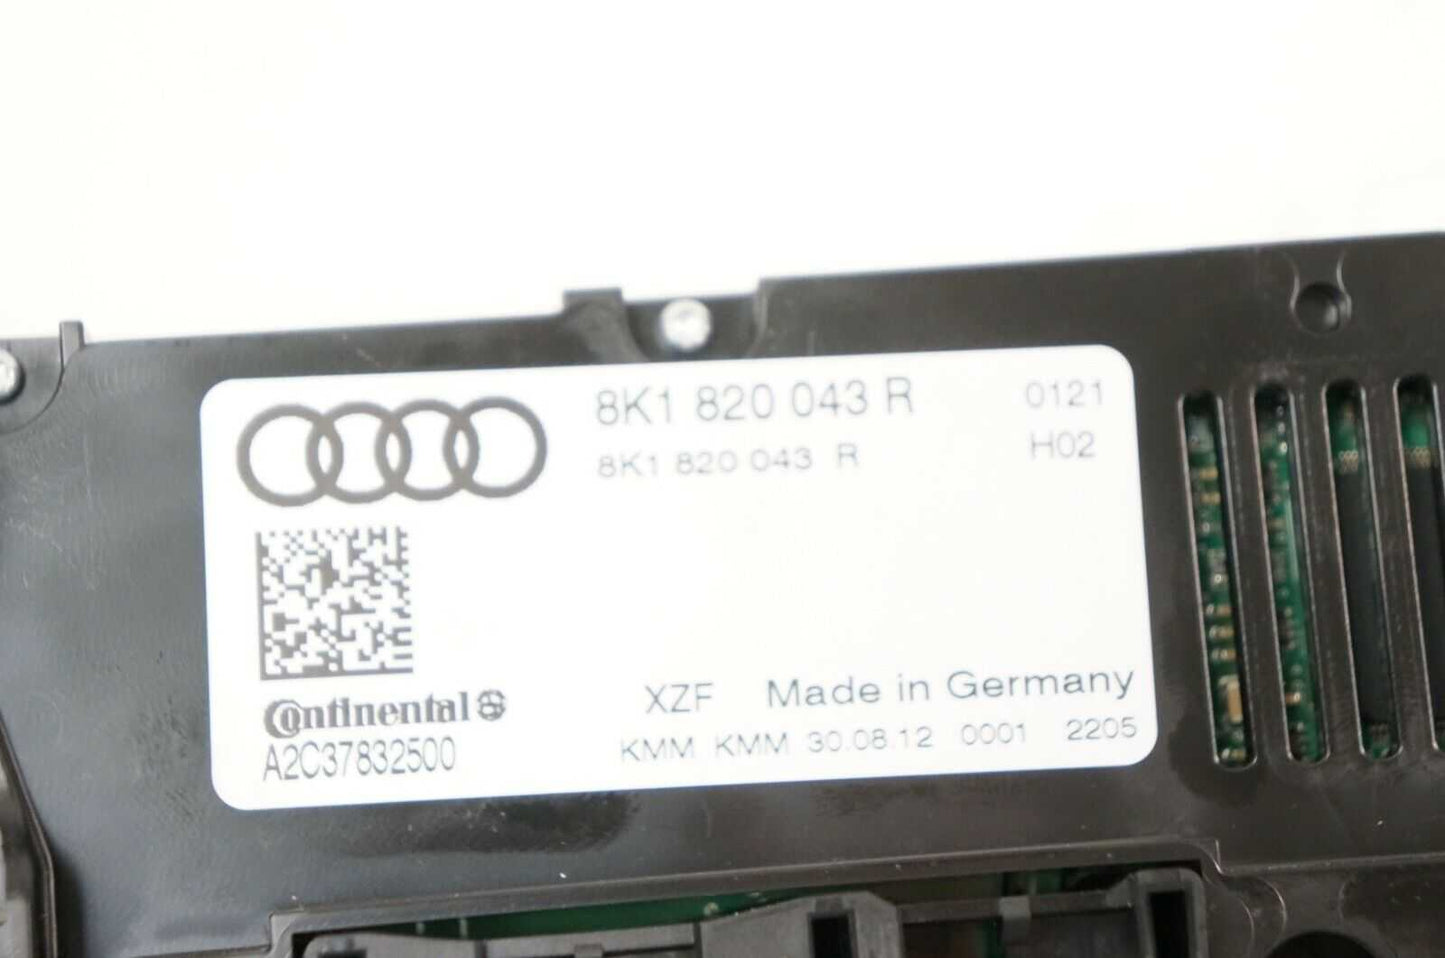 2013-2016 Audi A4 S4 Q5 Factory Heater AC Climate Controls OEM 8K1 820 043 R Alshned Auto Parts